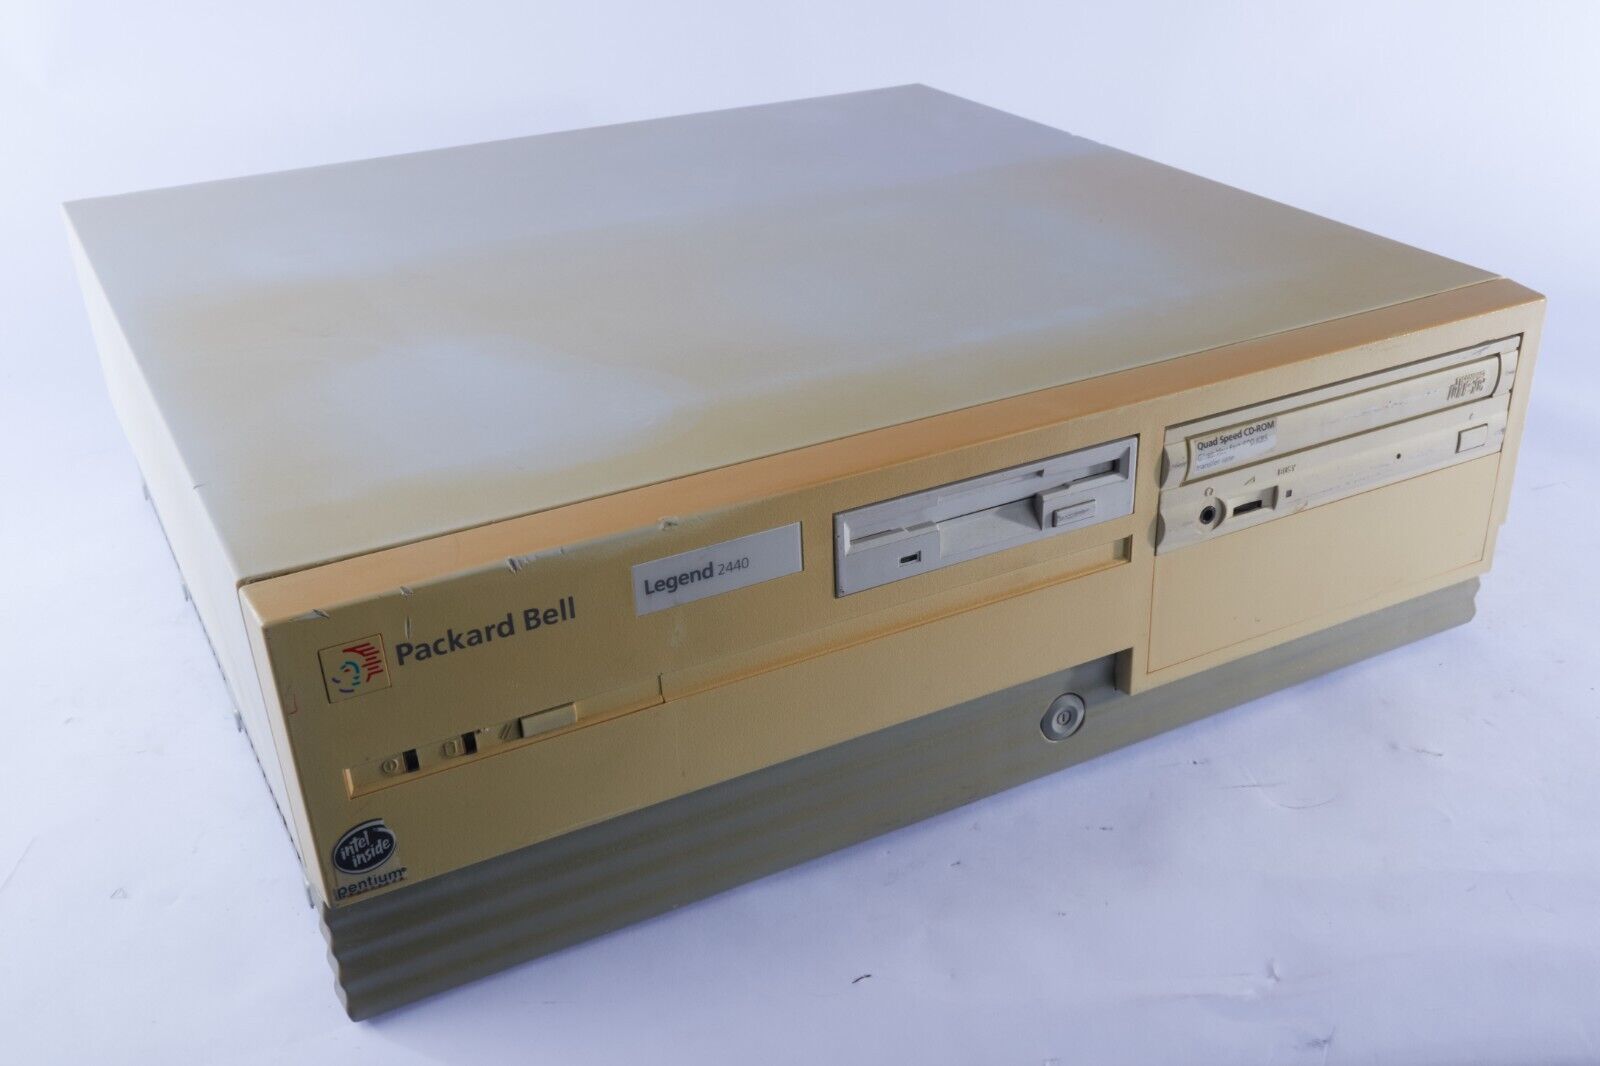 Vintage Packard Bell Legend 2440 Desktop Computer Tested 75MHz Pentium Retro